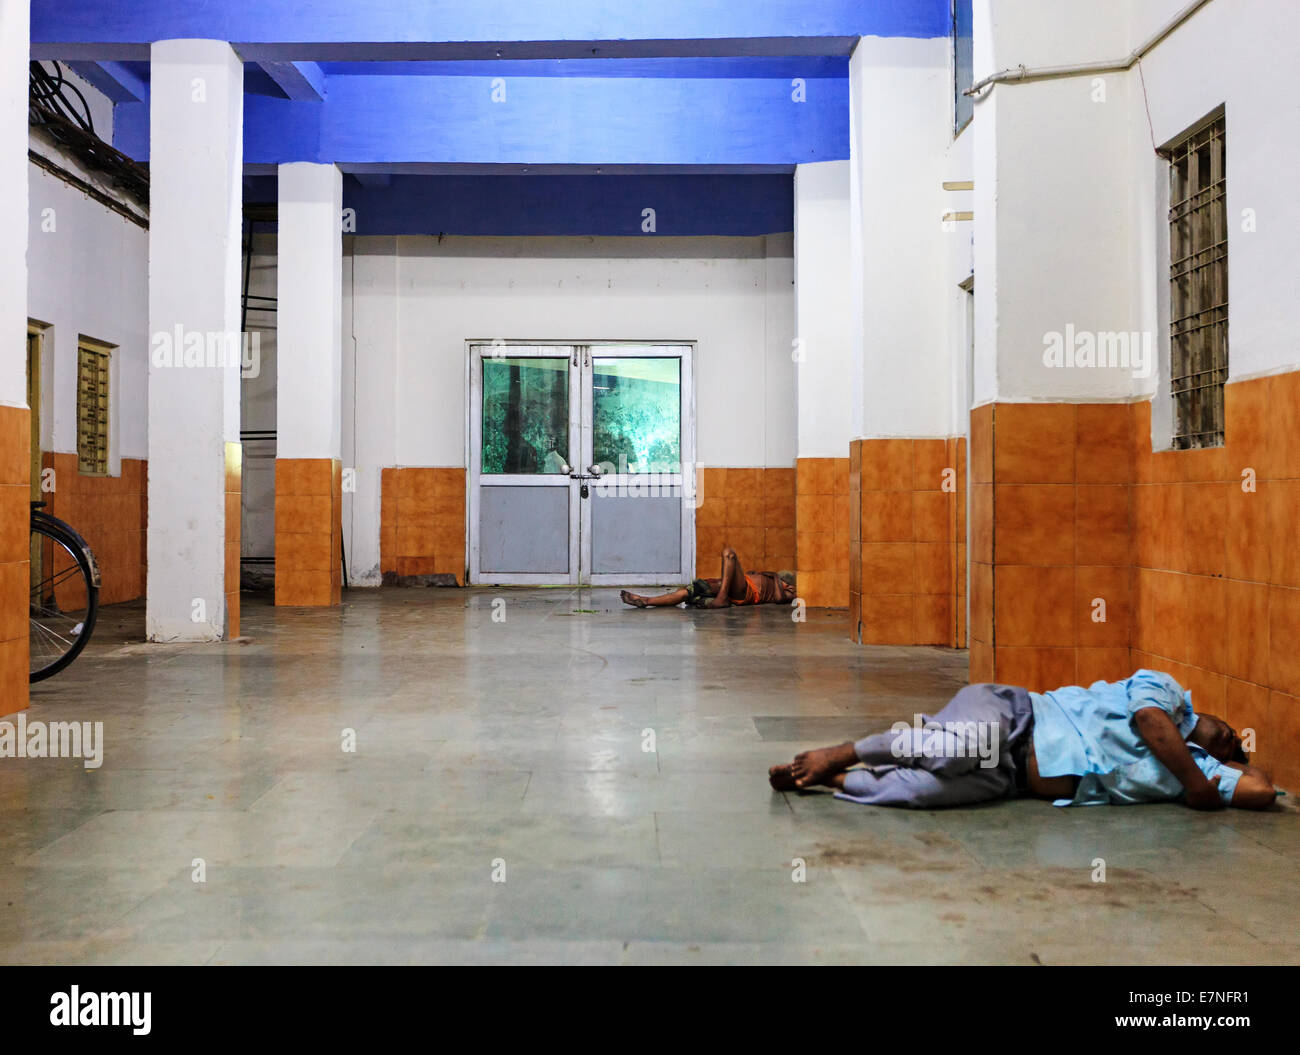 Homeless people in need sleeping on the floor Stock Photo